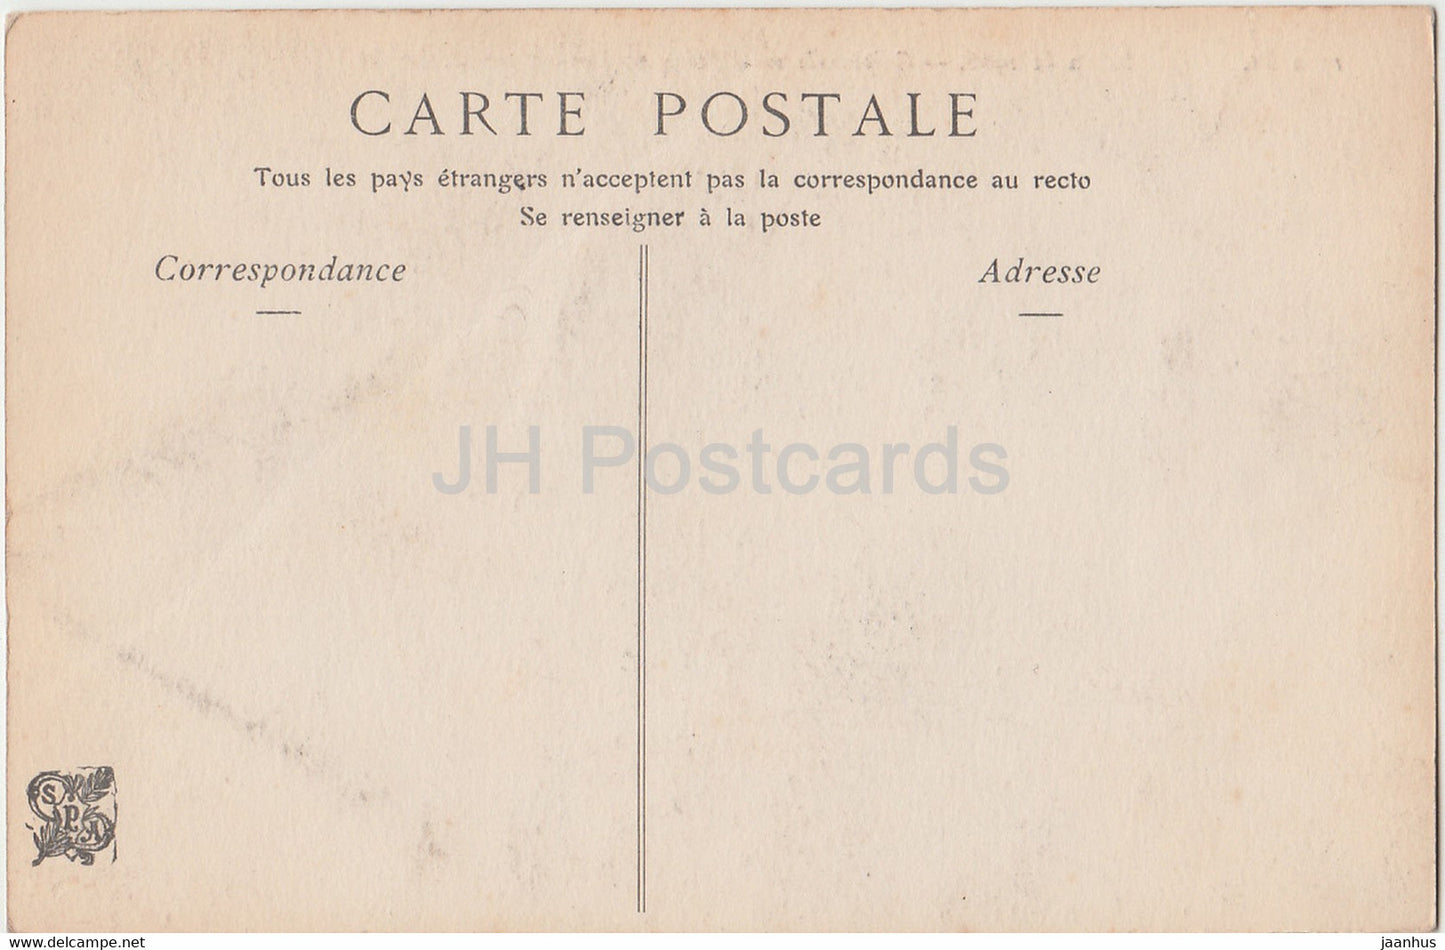 Gemälde von A. Rigolot – Crepuscule sur l'Etang de Cernay – Salon de 1906 – Französische Kunst – alte Postkarte – Frankreich – unbenutzt